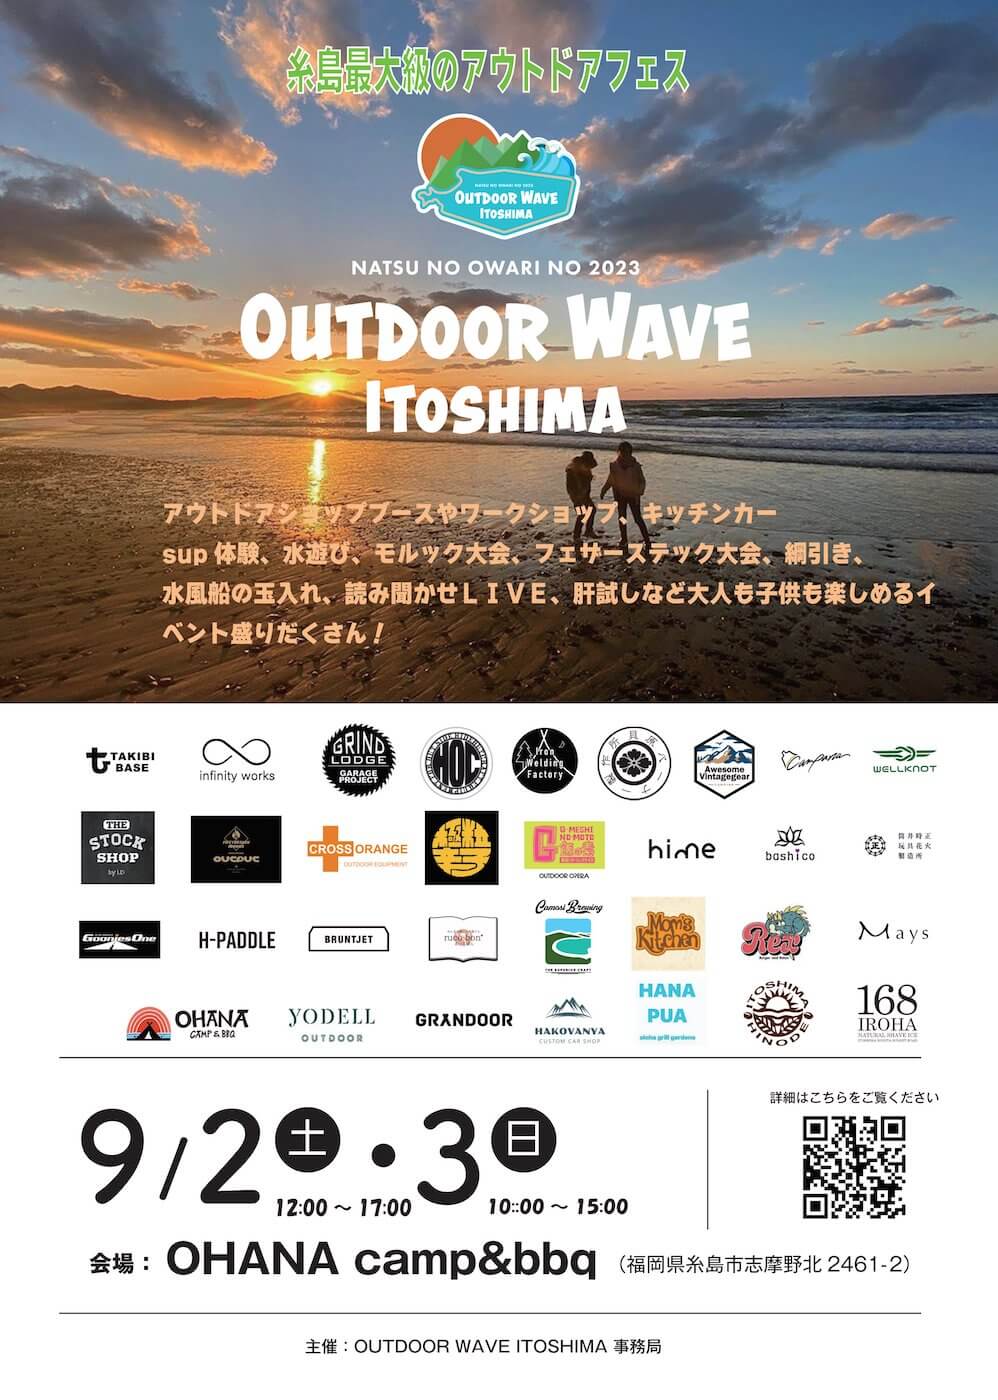 Outdoor Wave Itoshima